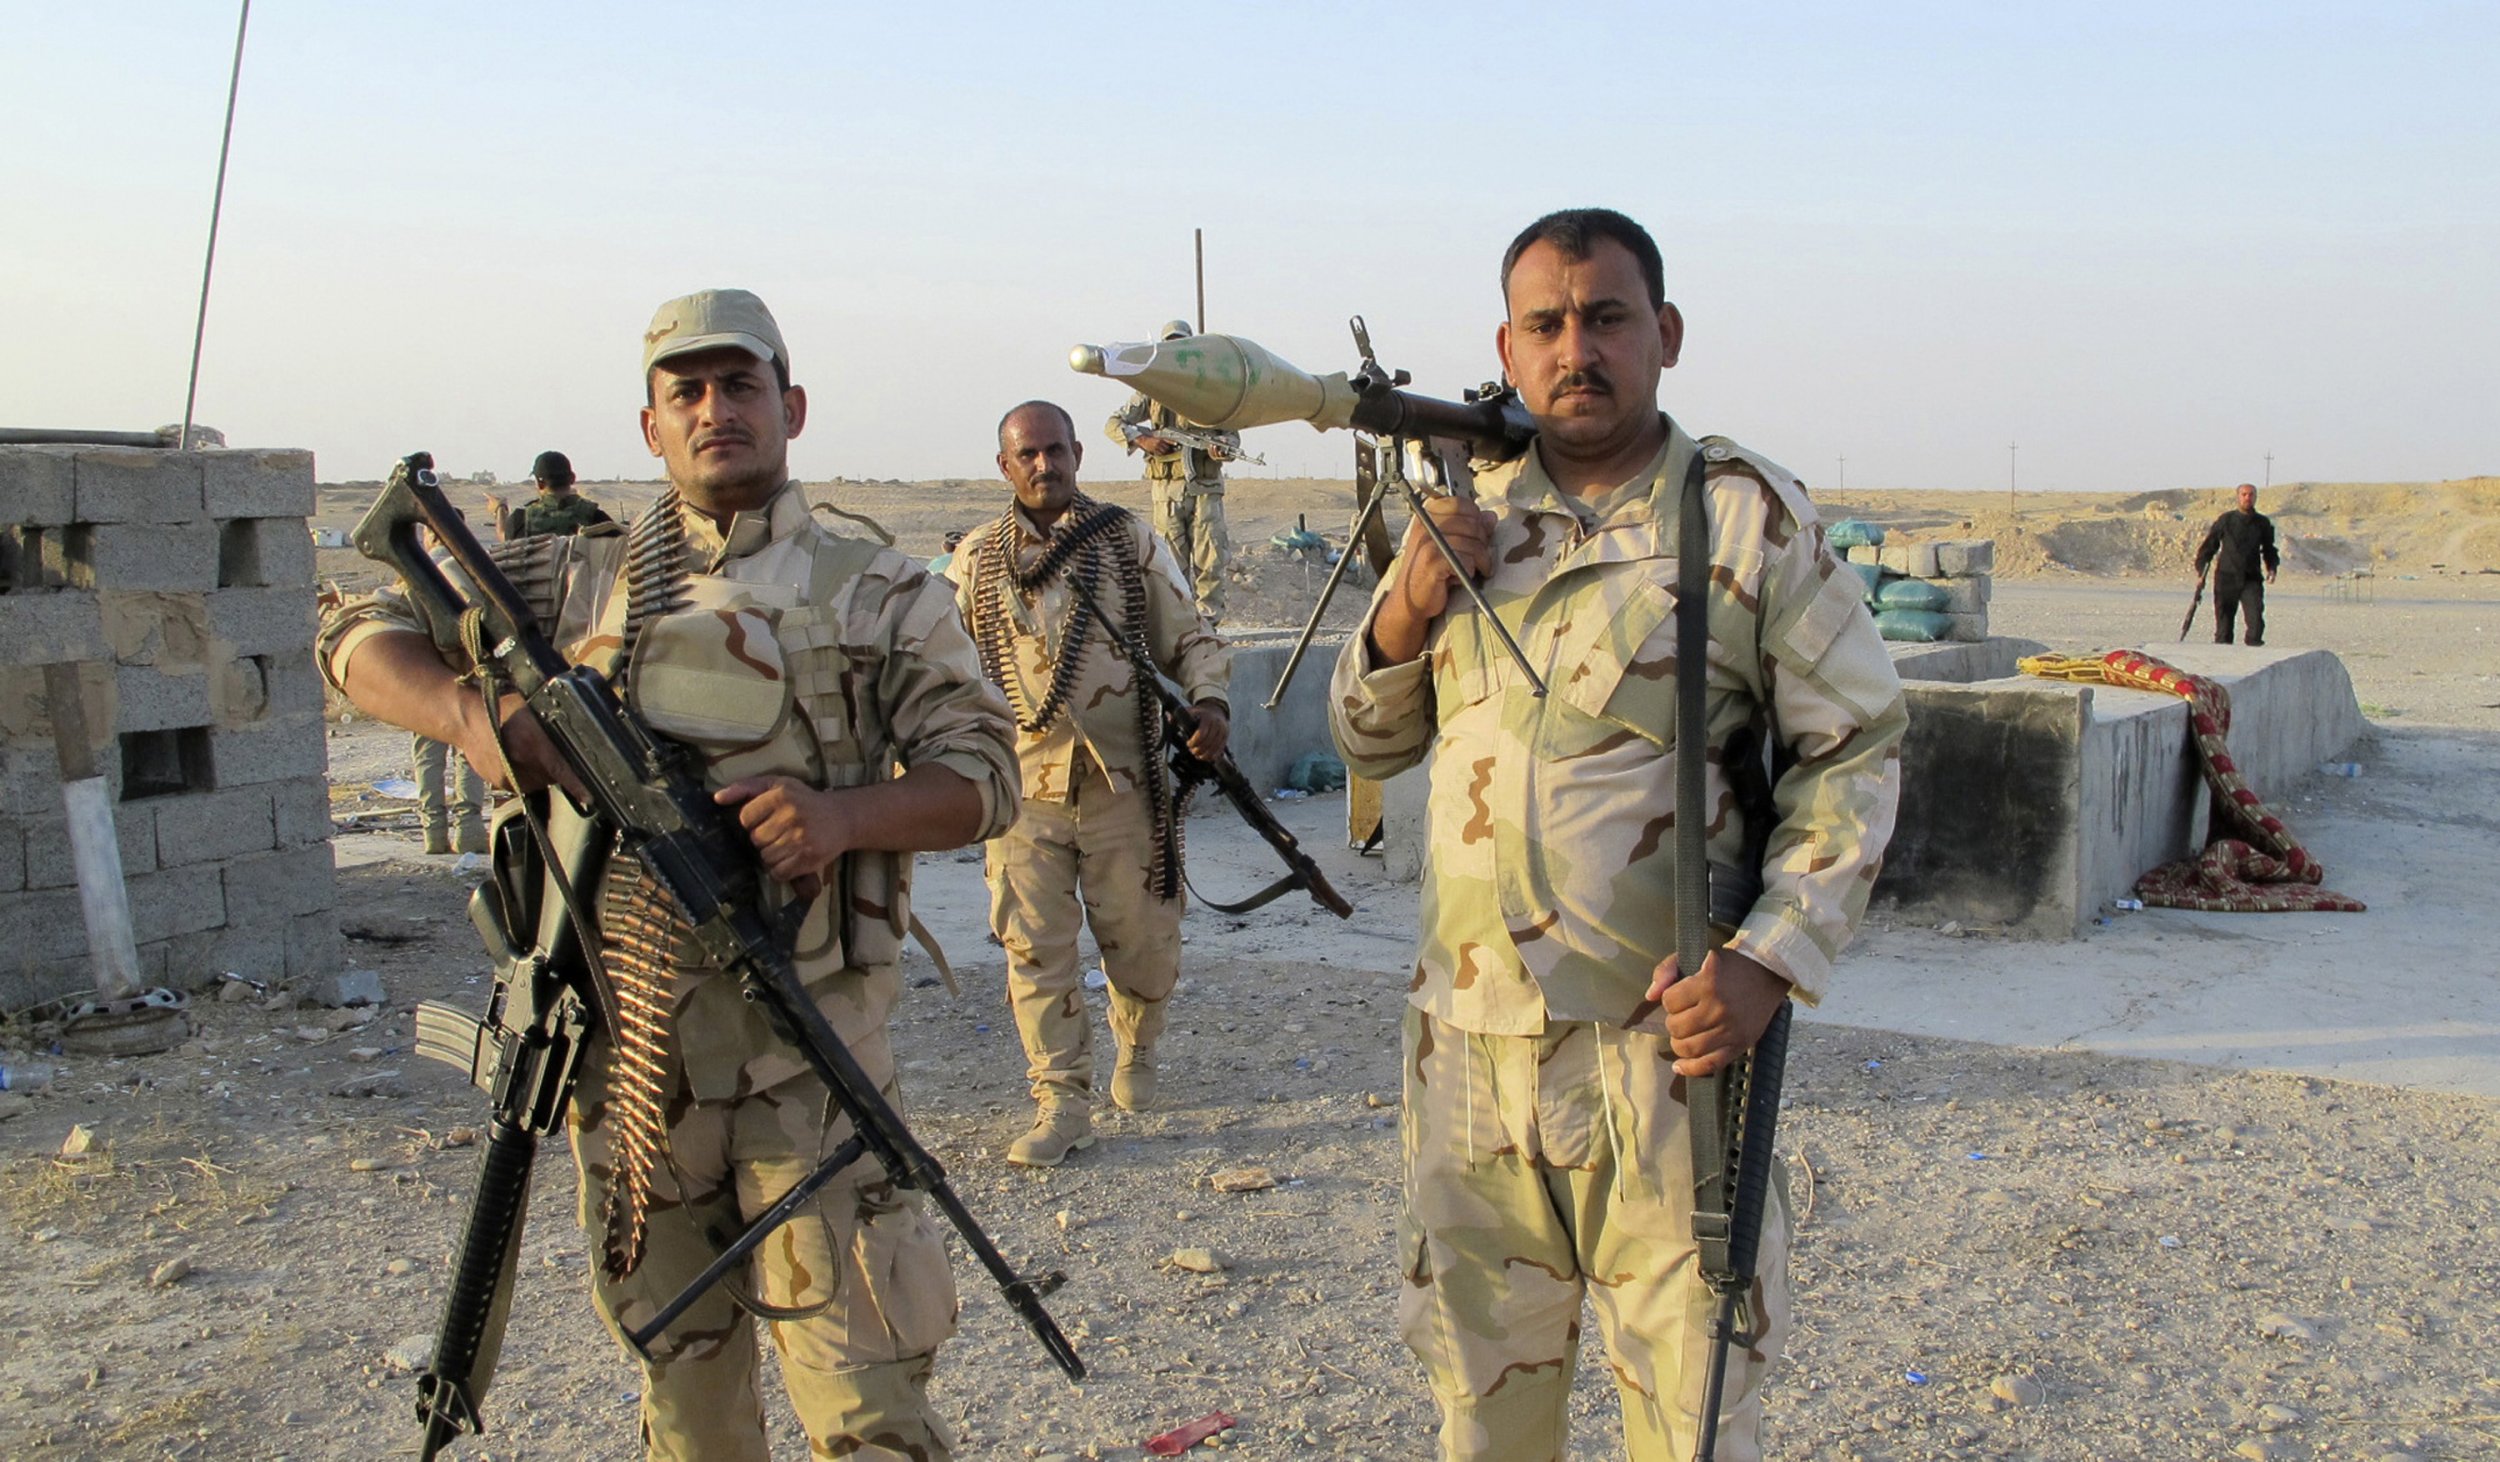 iraqi insurgency